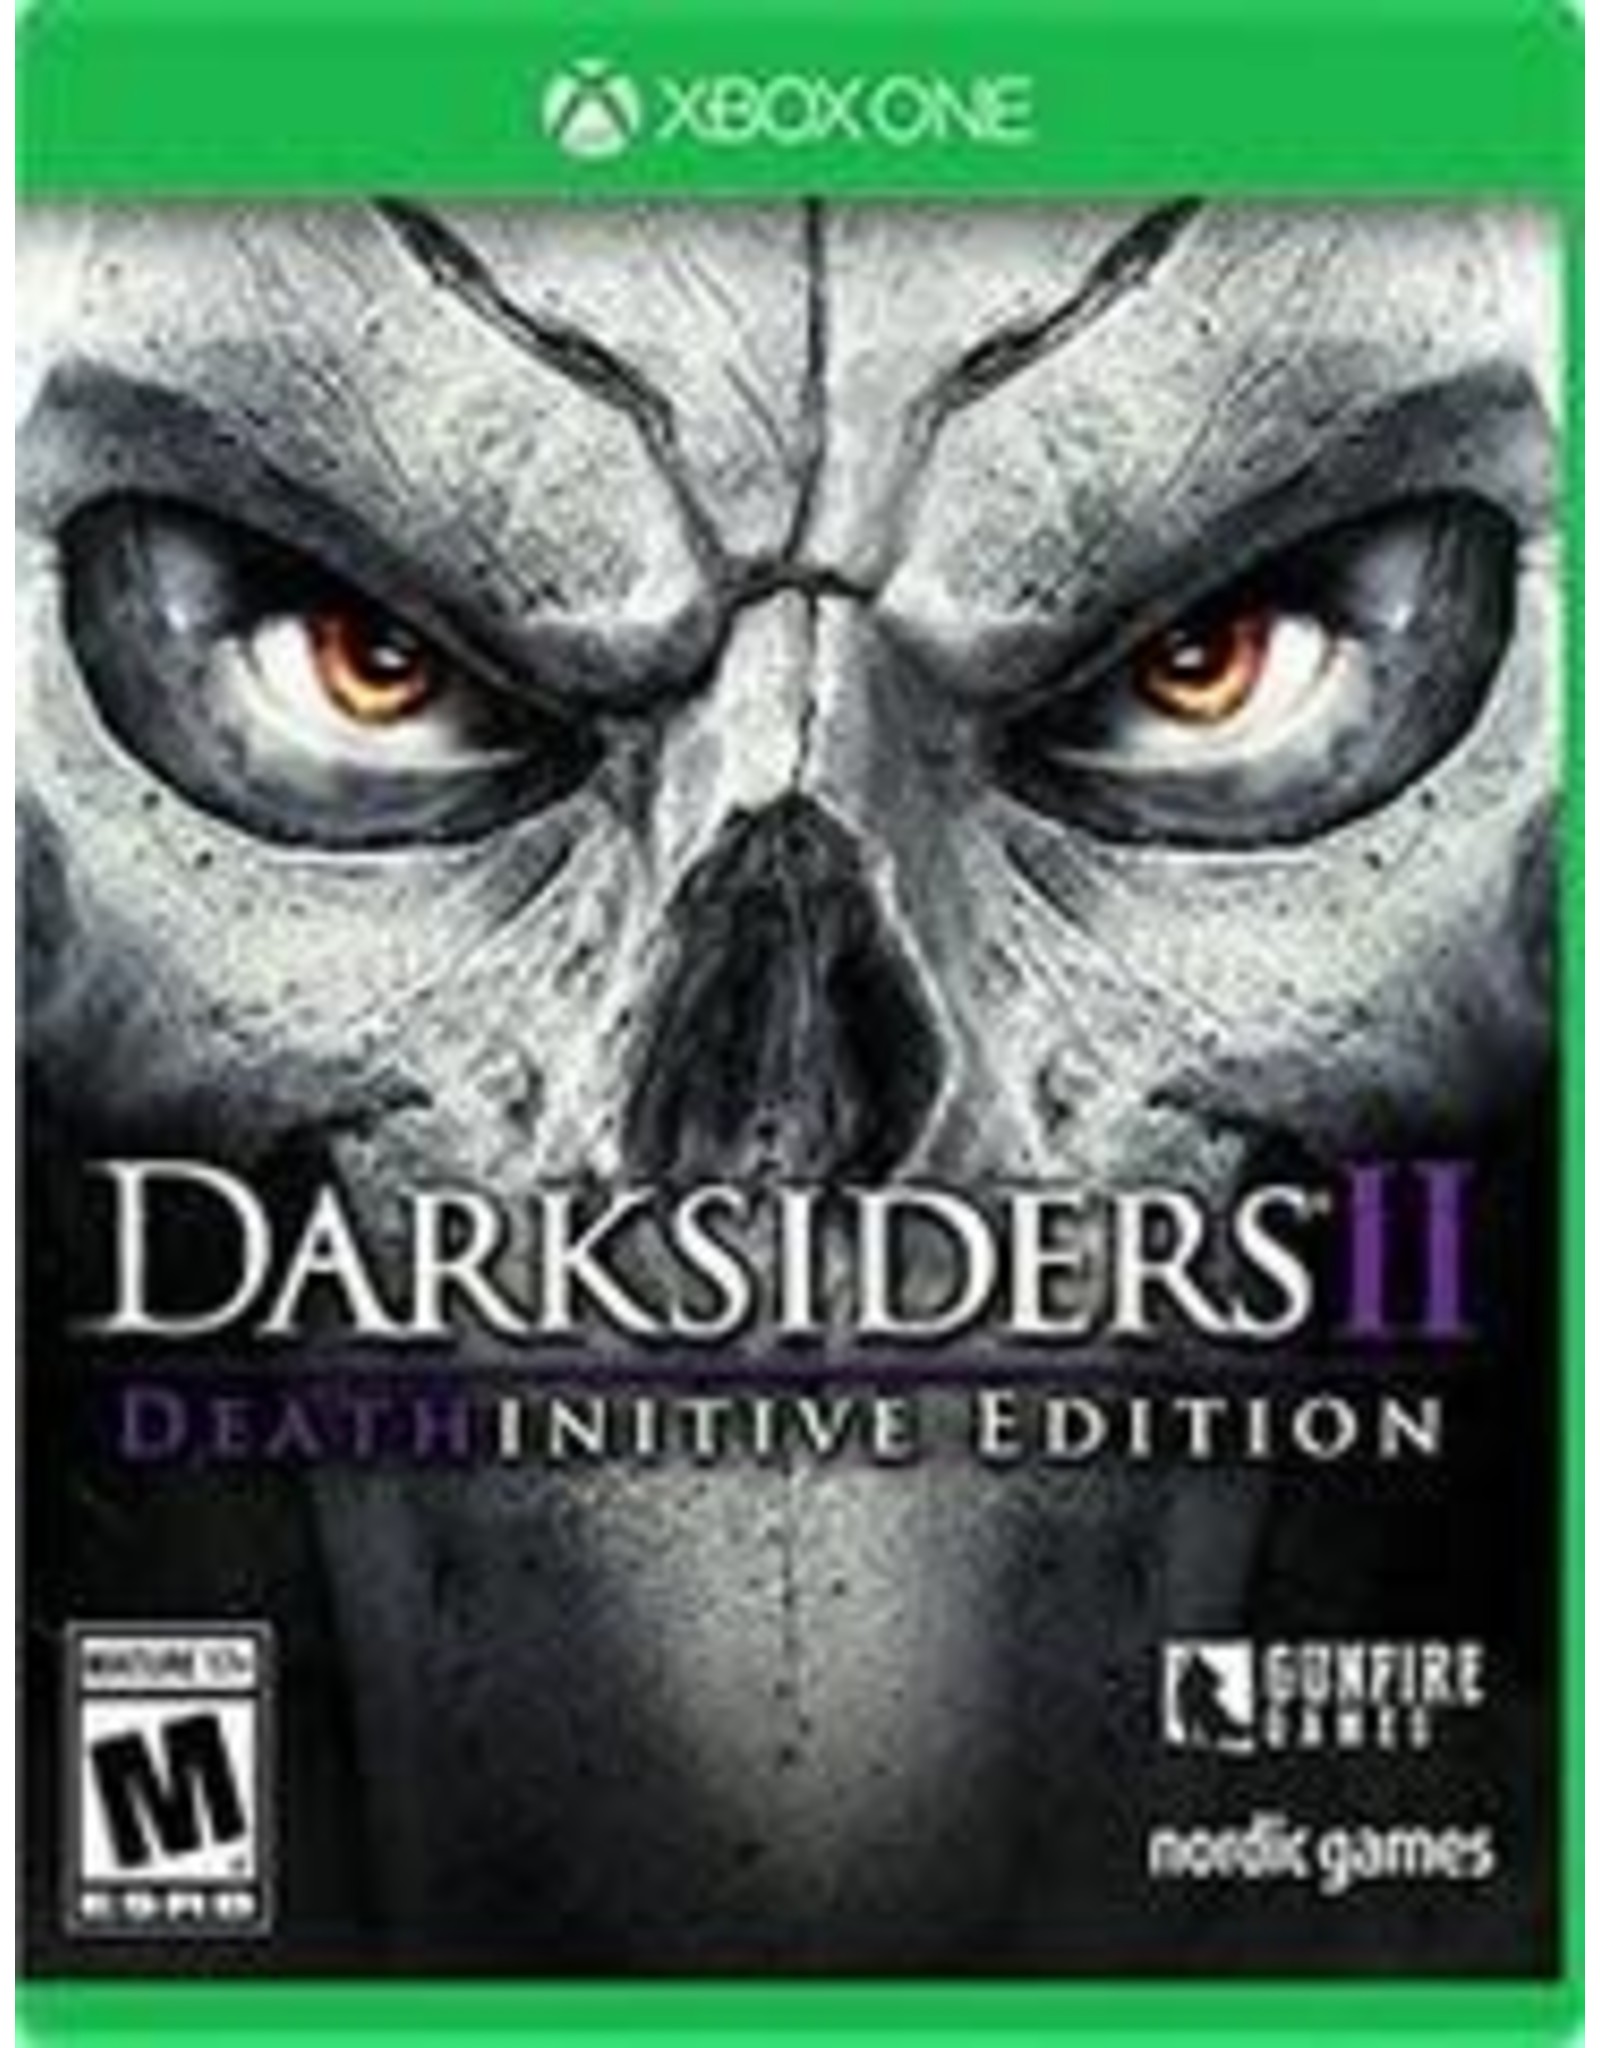 Xbox One Darksiders II Deathinitive Edition (CiB)